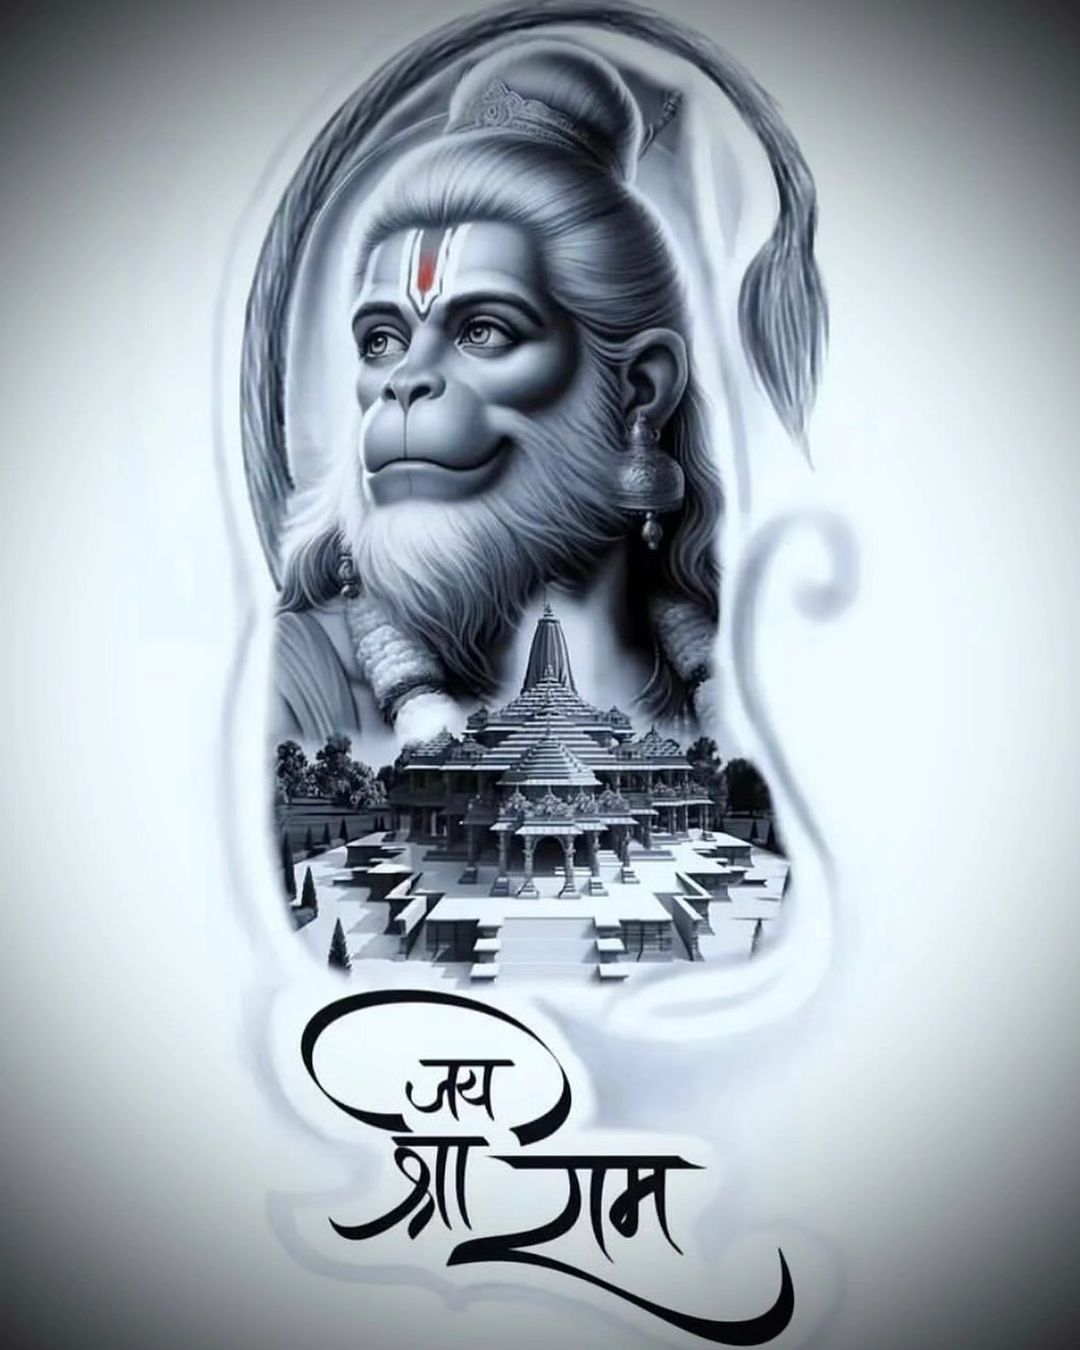 The 3 Most Polarizing Words in India: Jai Shri Ram